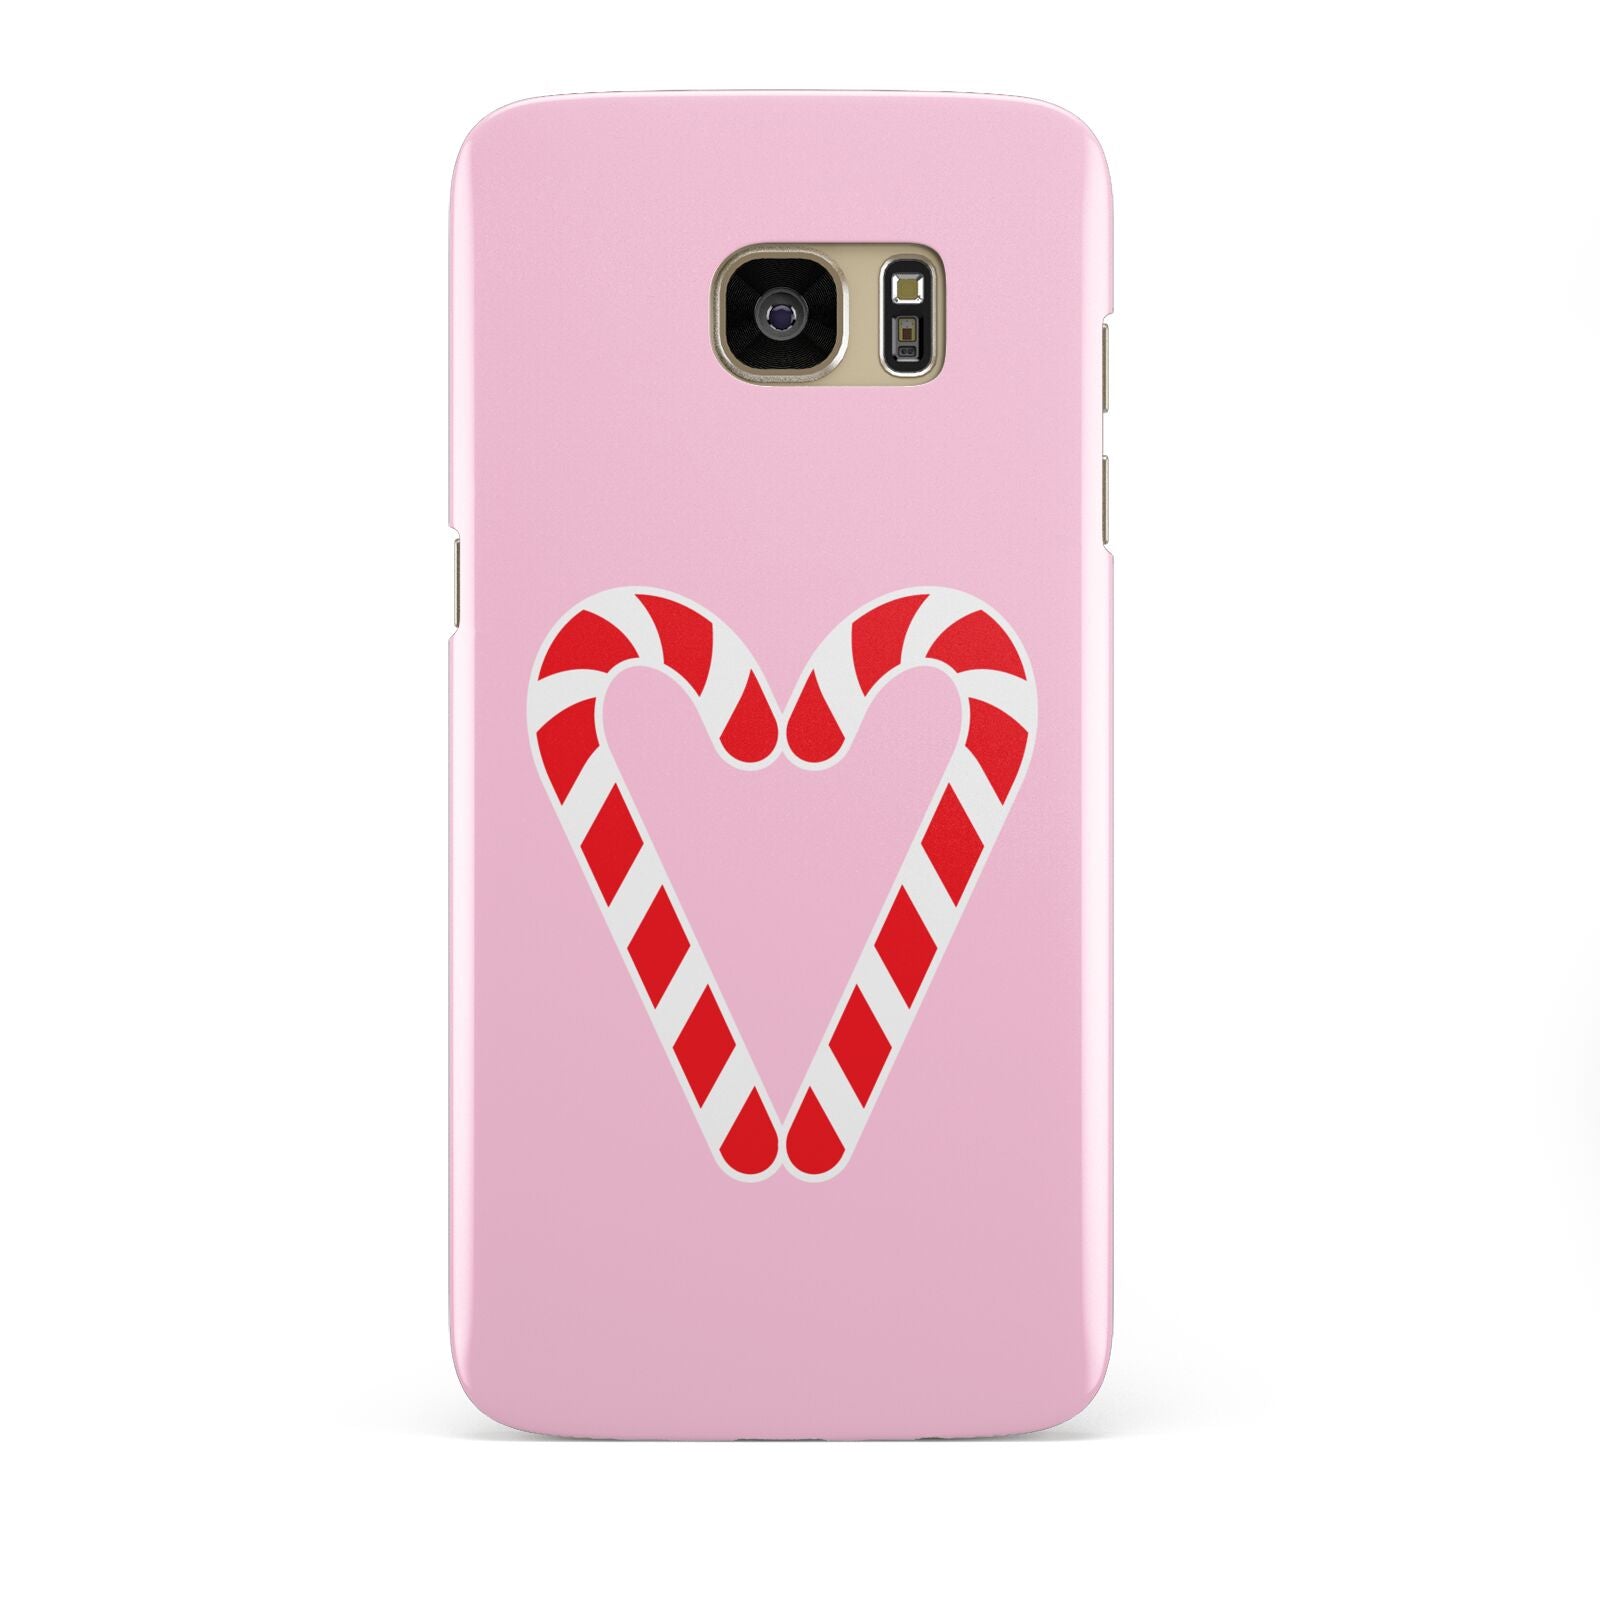 Candy Cane Heart Samsung Galaxy S7 Edge Case